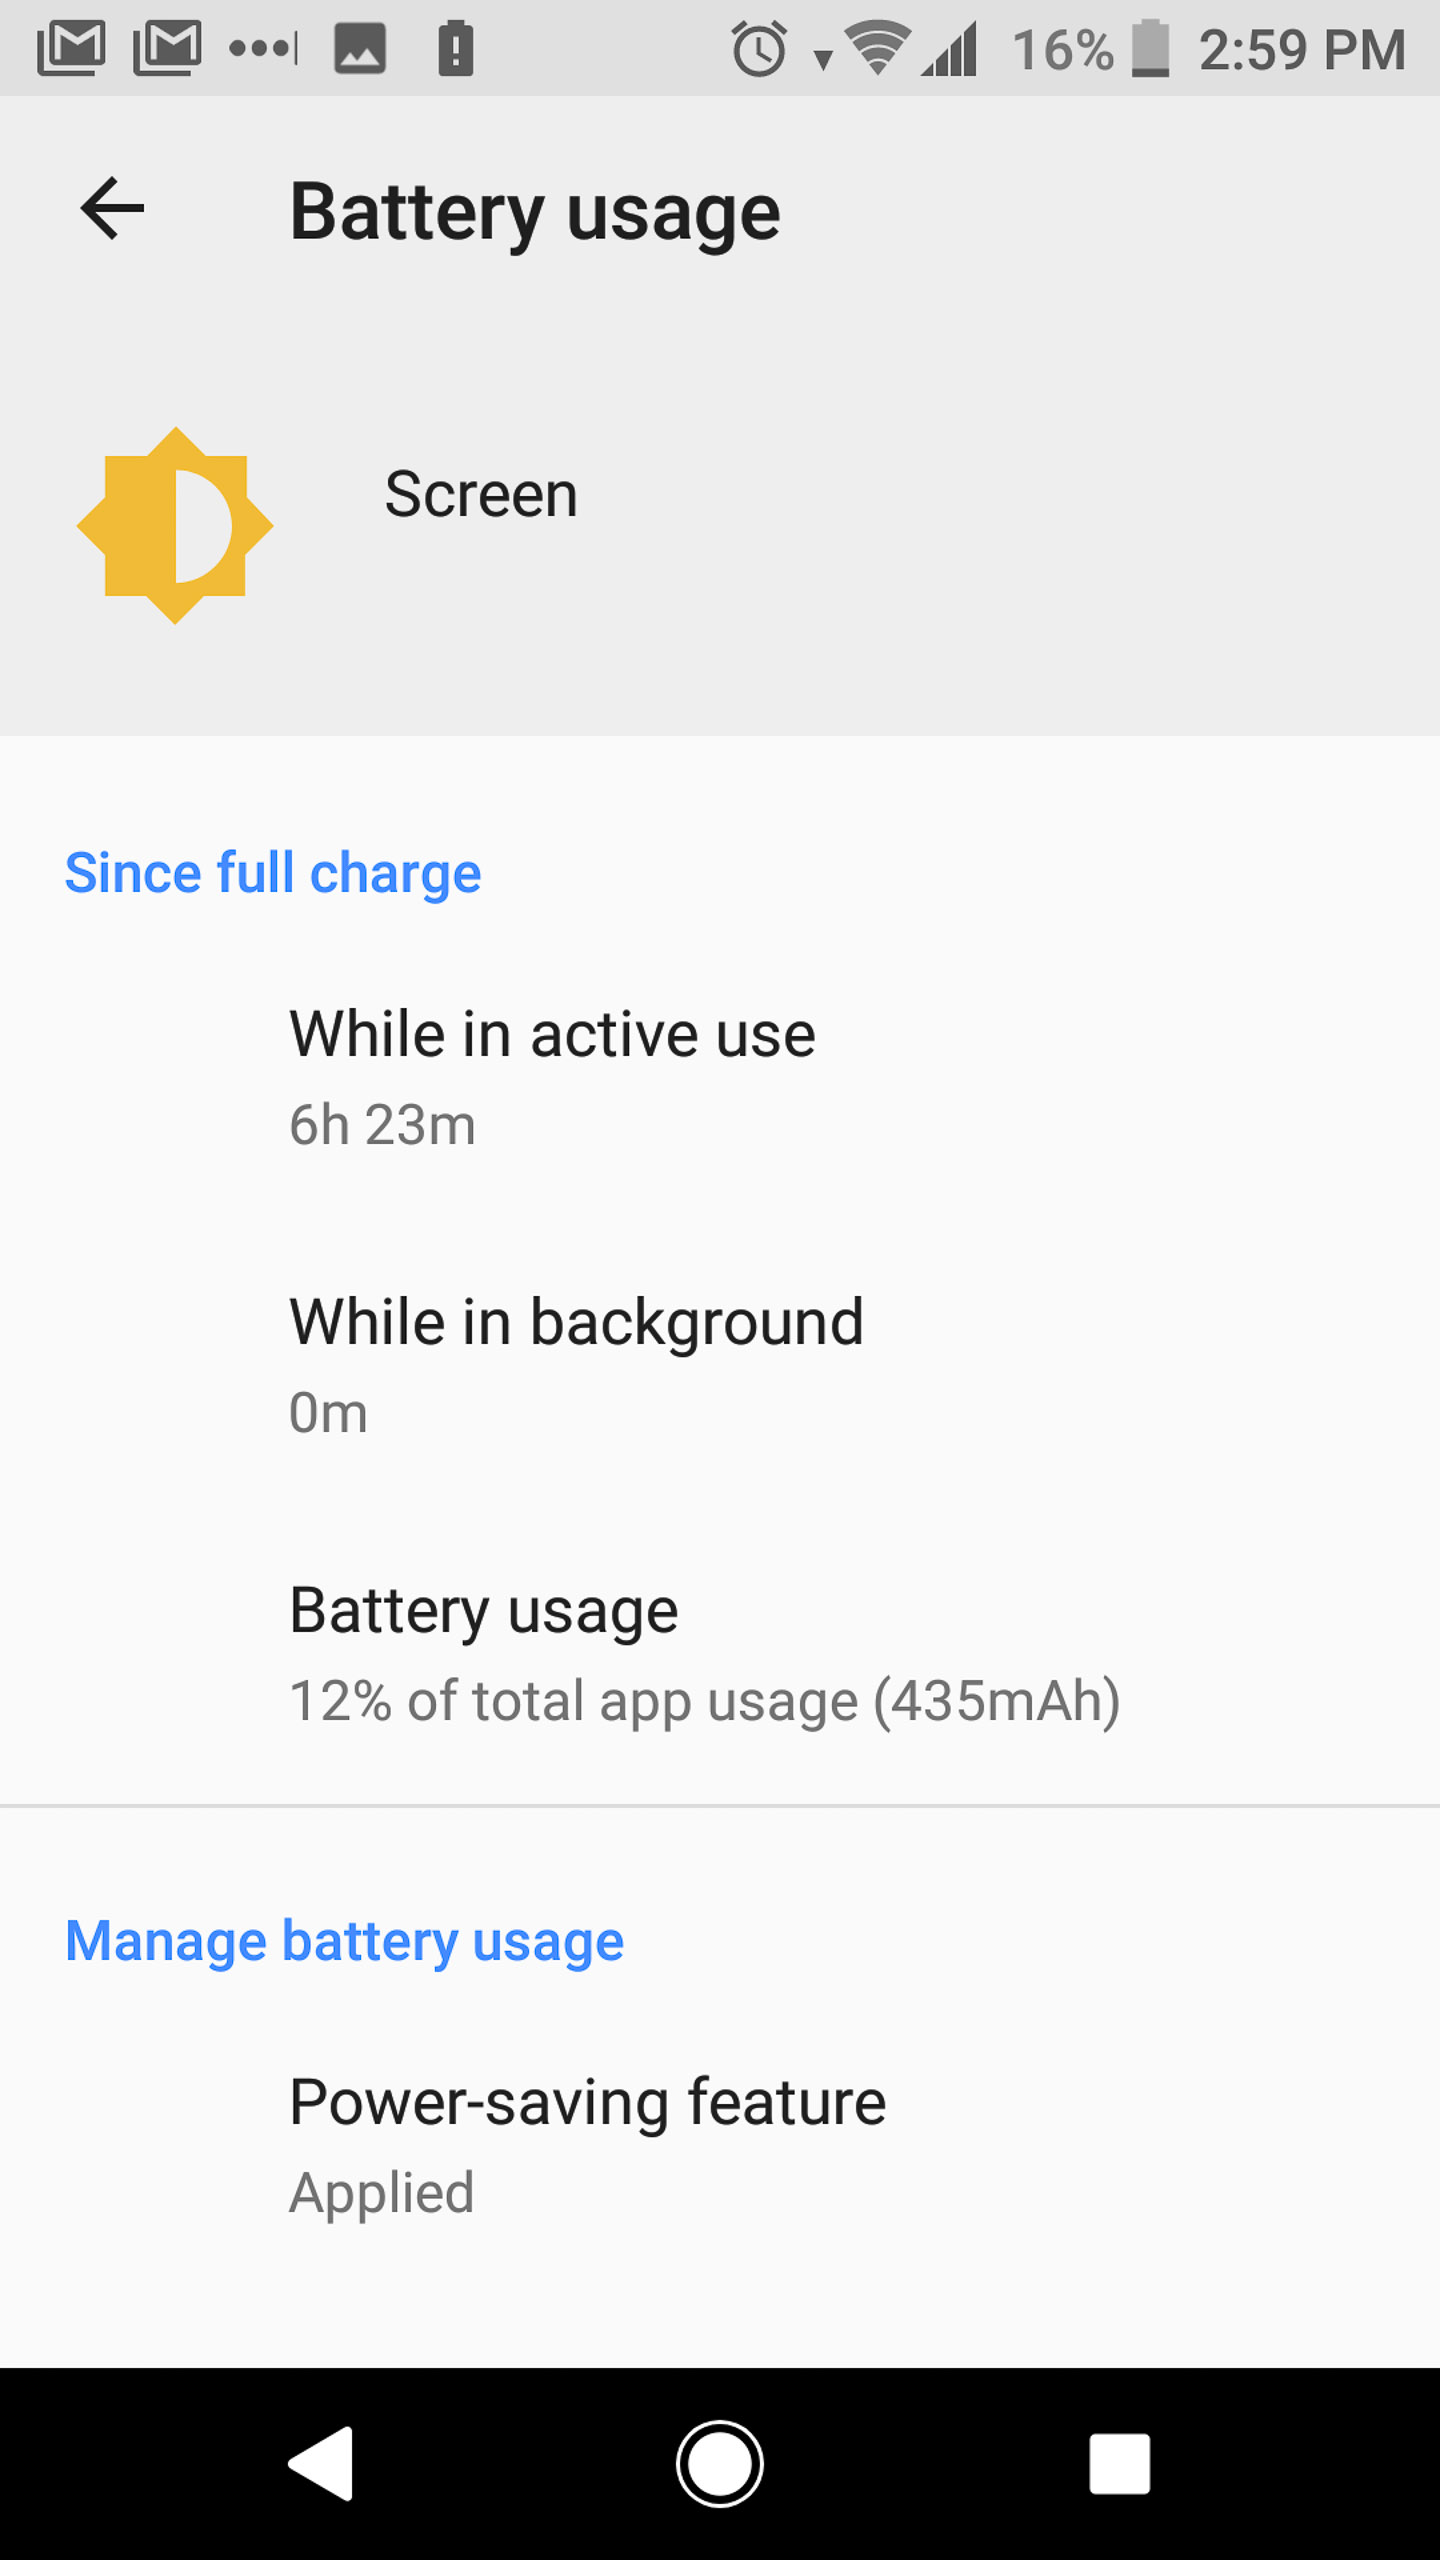 Sony Xperia XA2 Ultra battery usage details